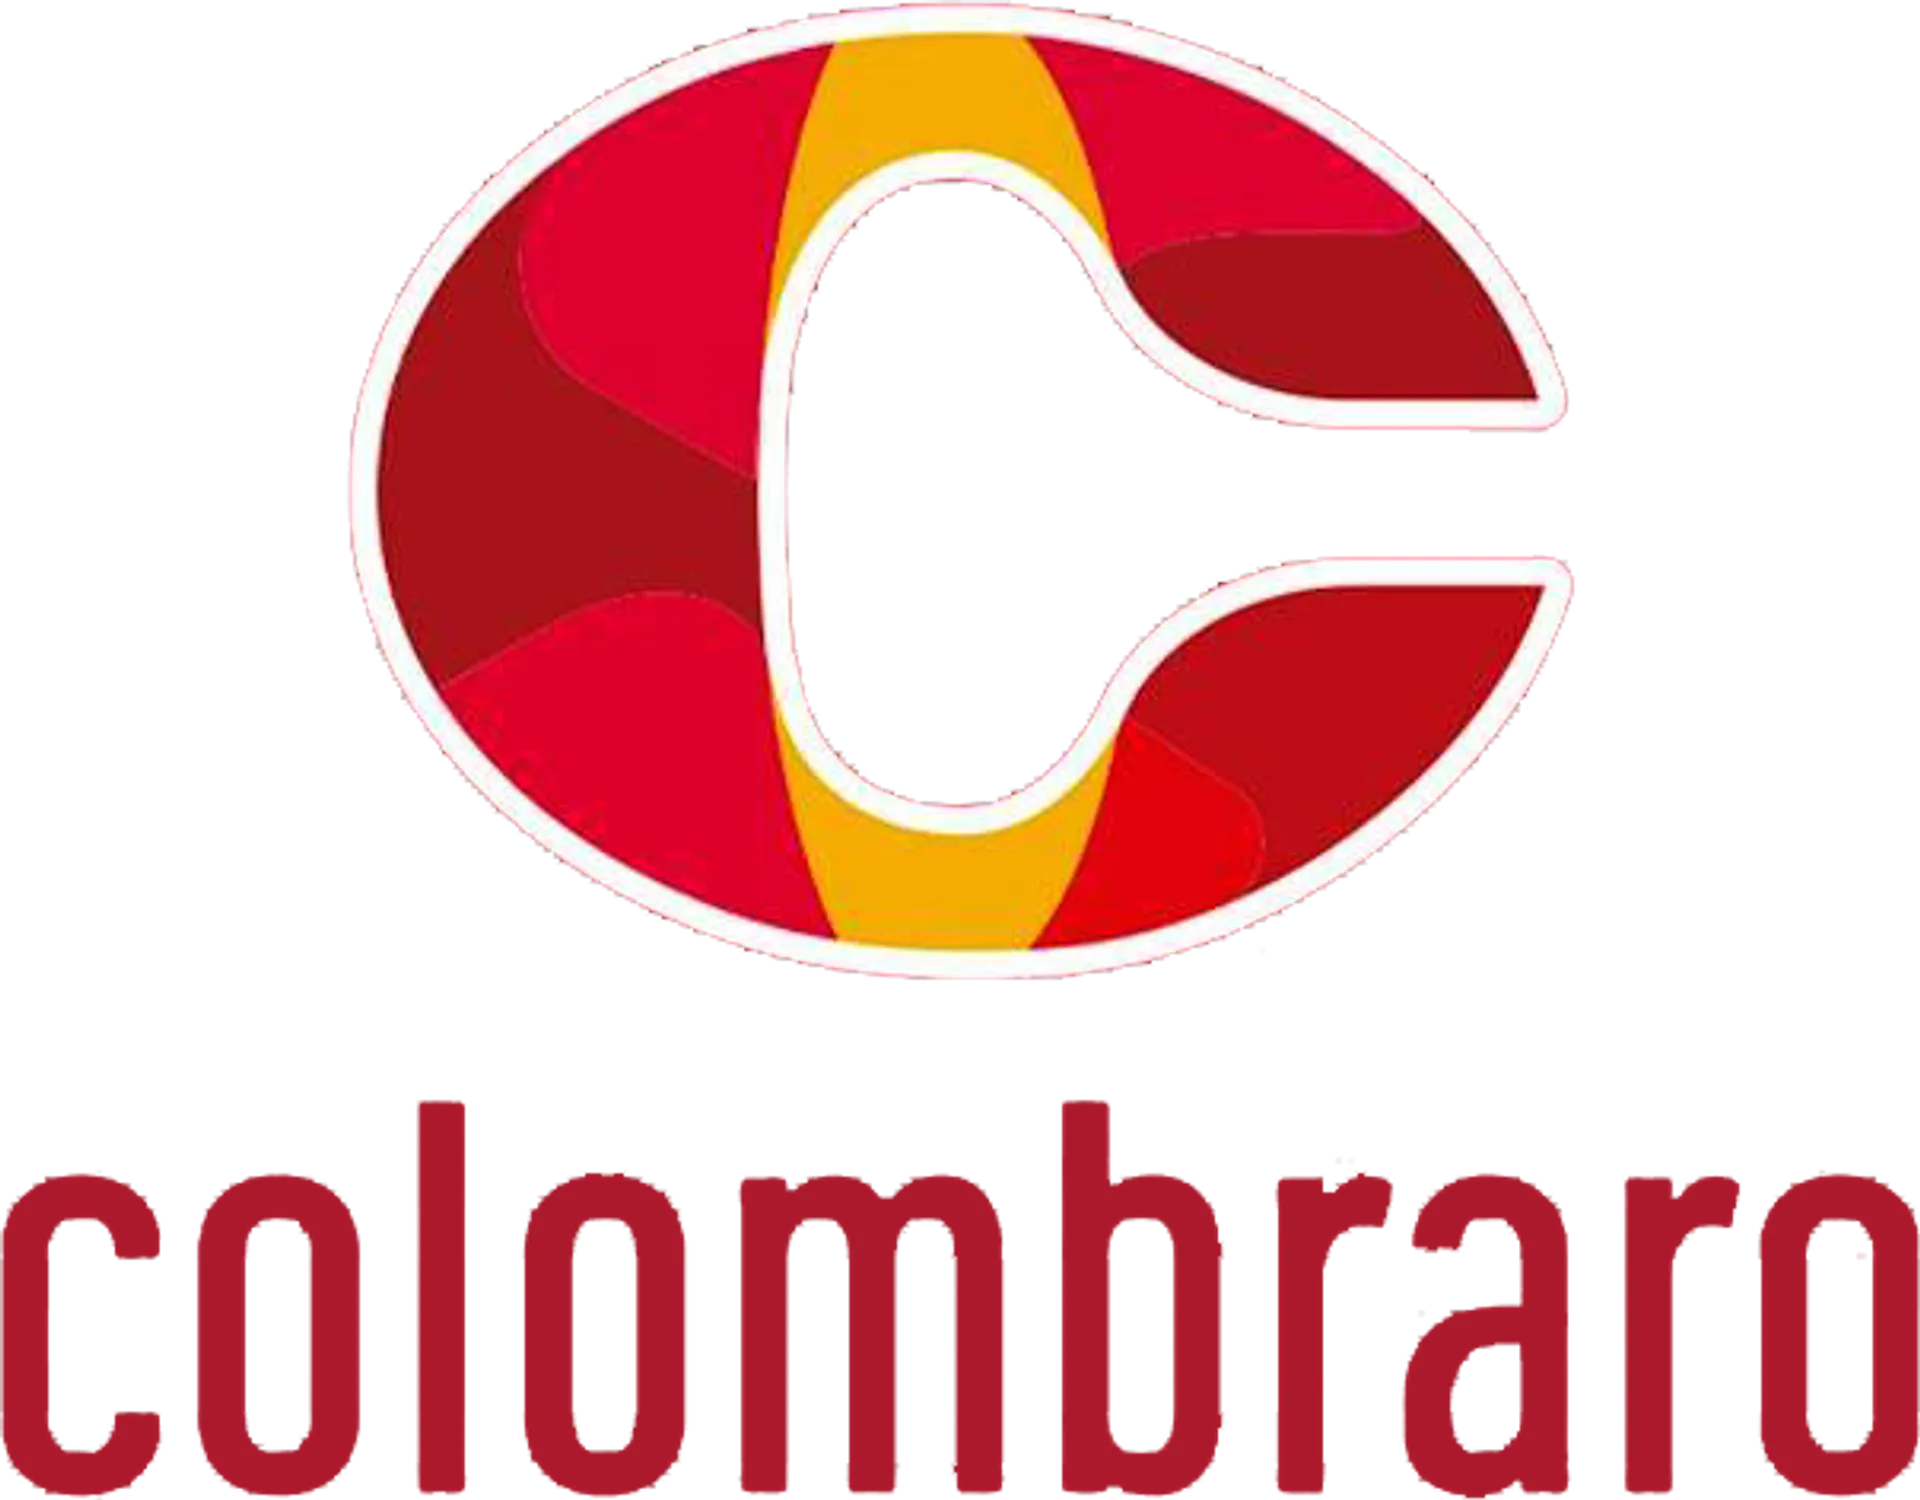 COLOMBRARO logo